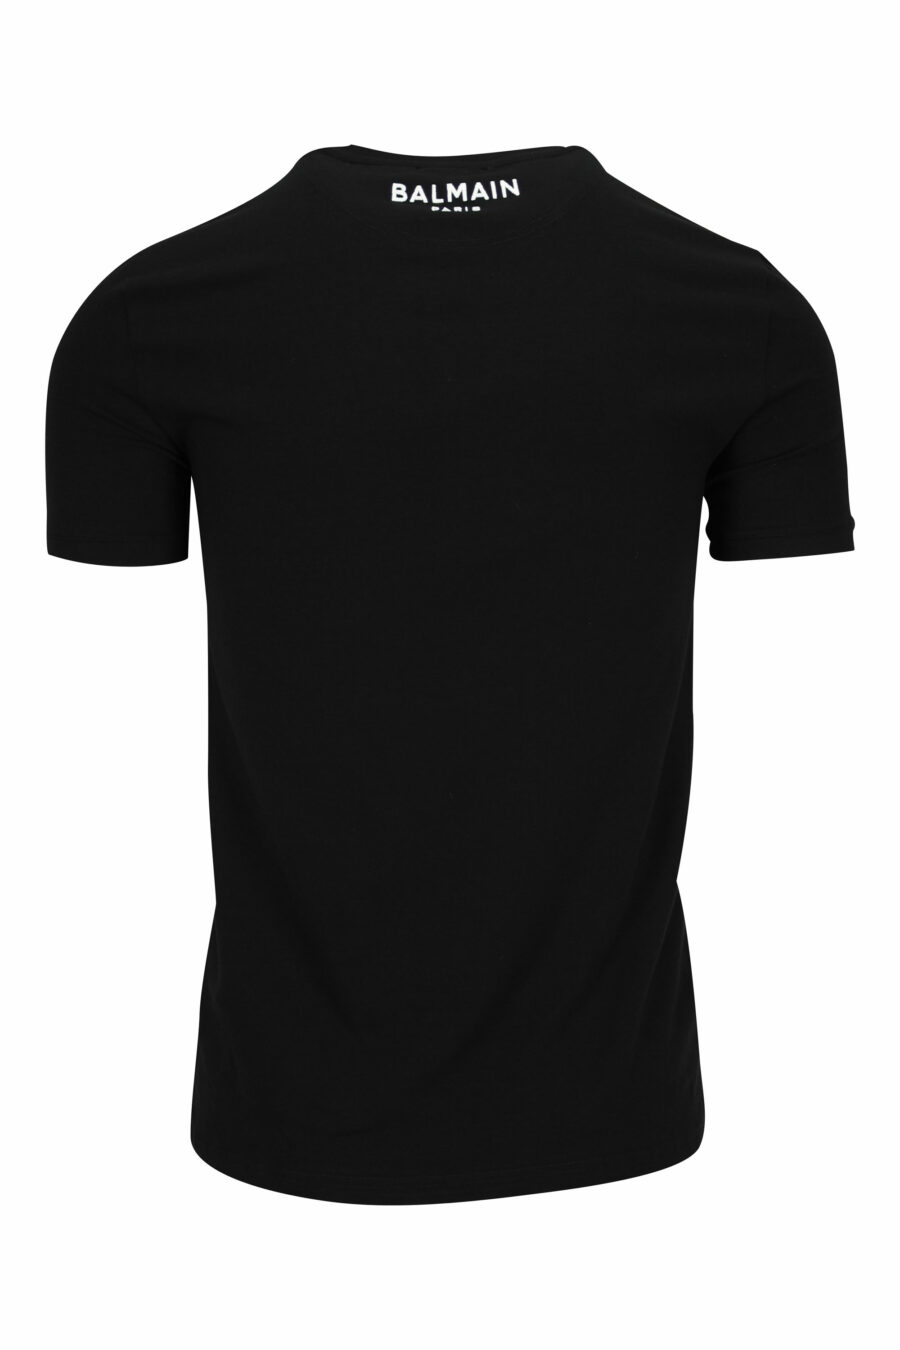 T-shirt preta com mini-logotipo na gola - 8032674524621 1